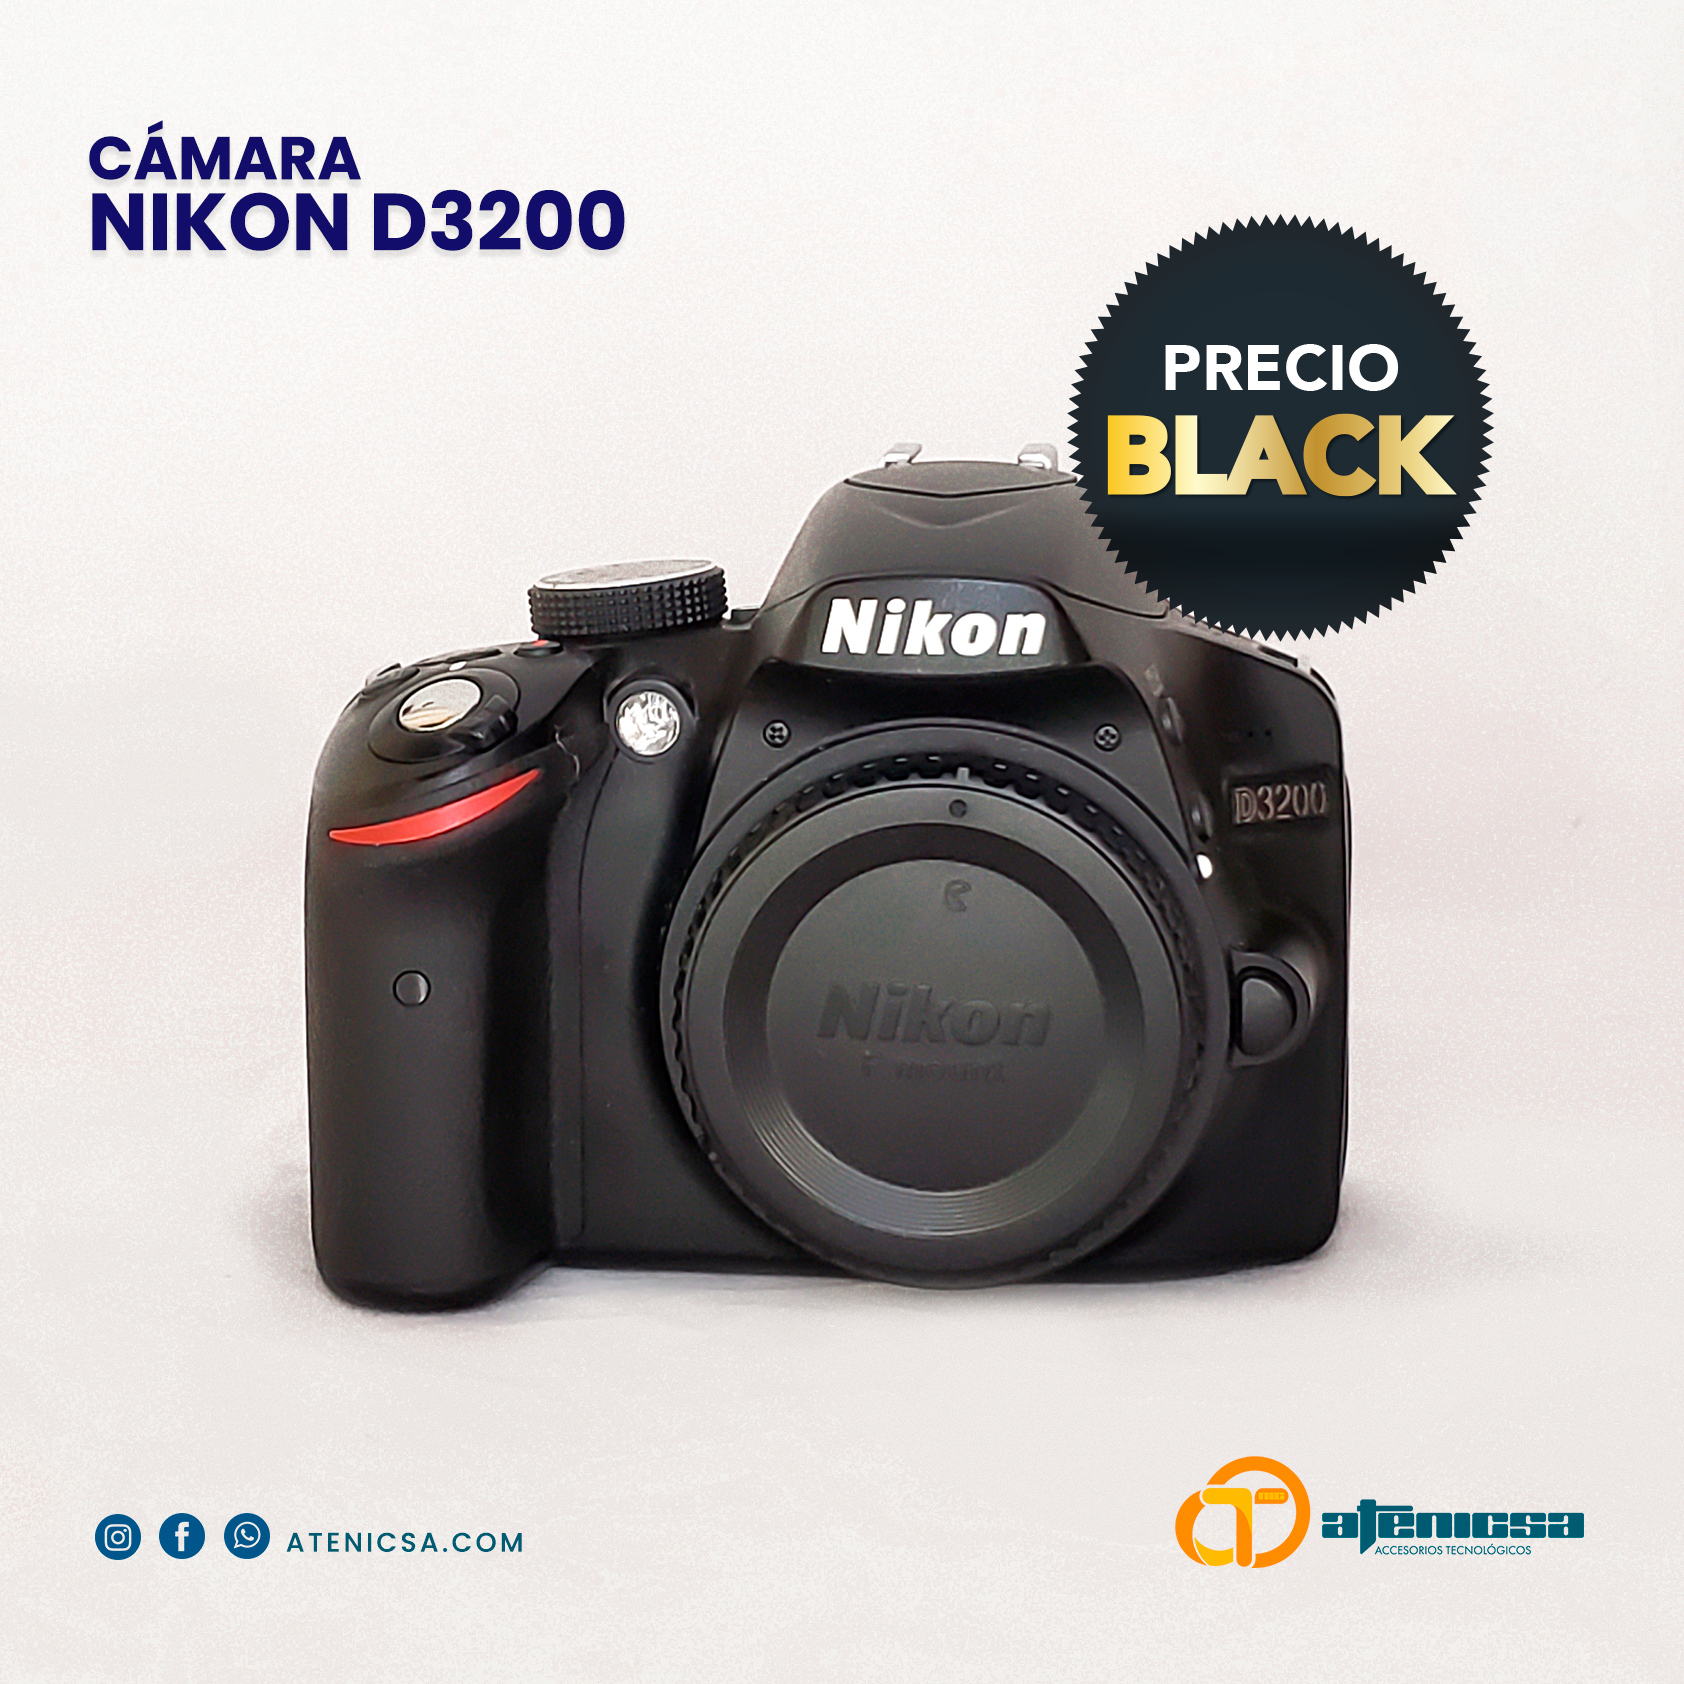 Nikon D3200 - ATENICSA